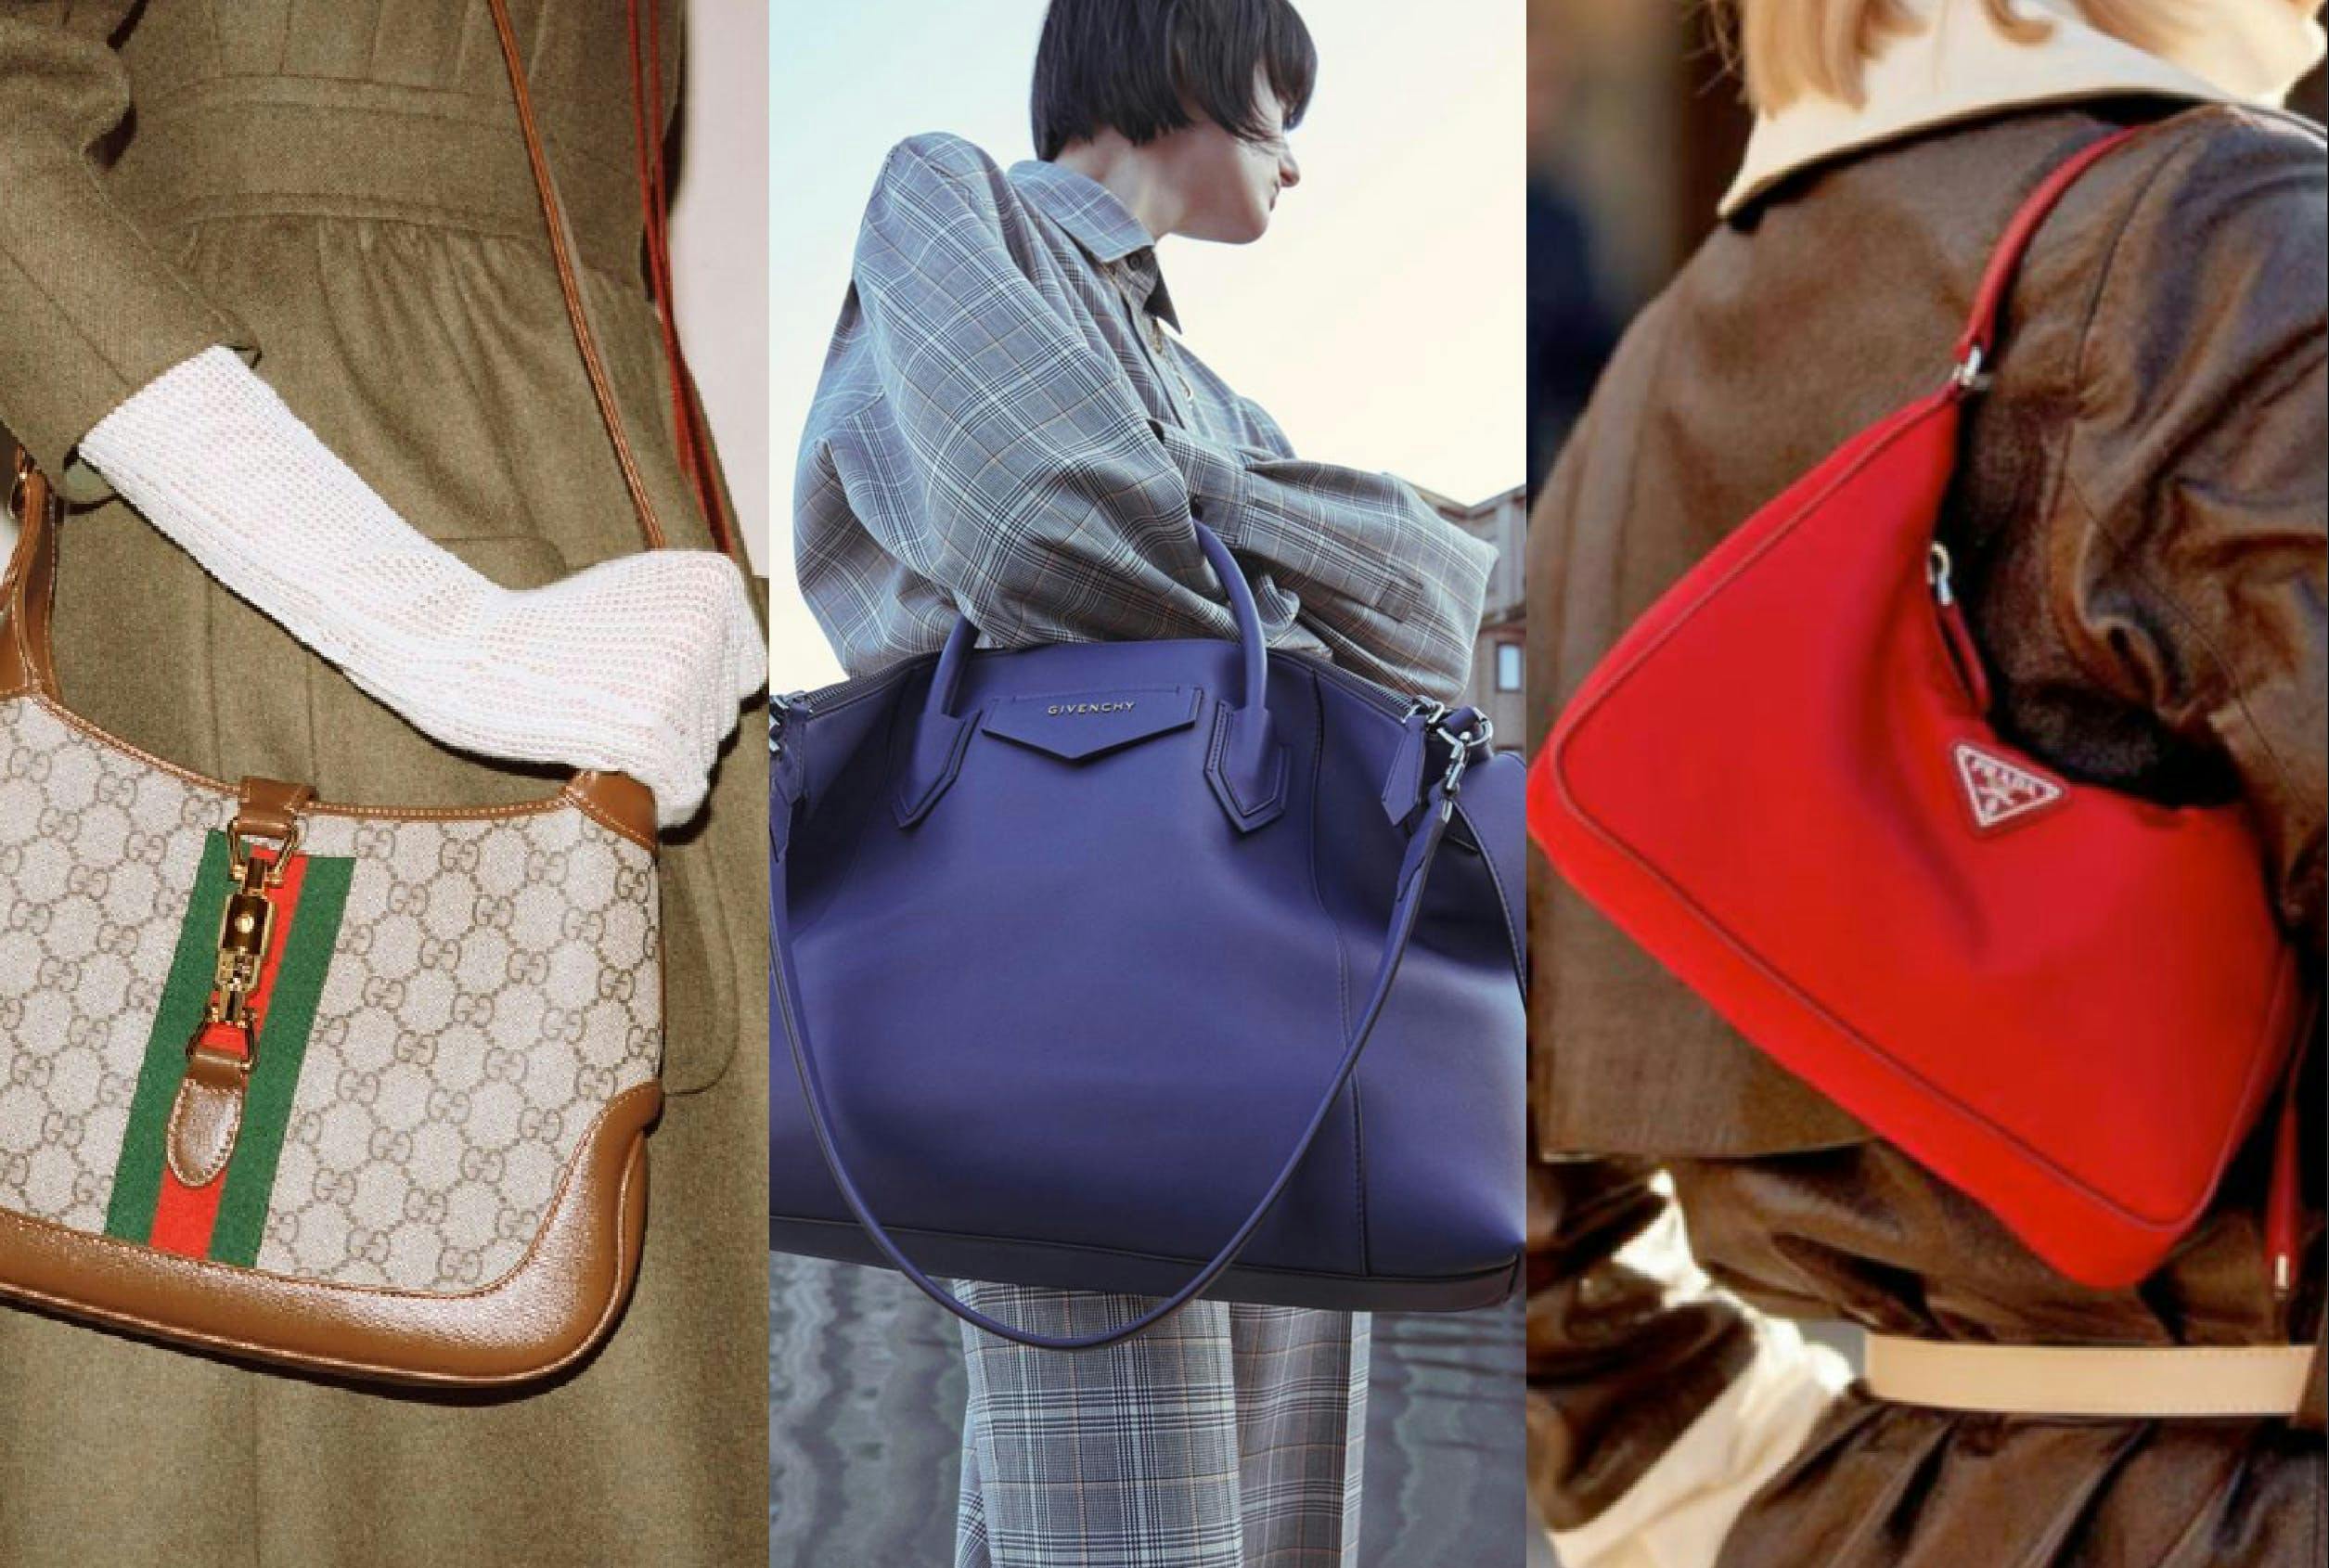 handbag accessories bag accessory purse clothing apparel person human